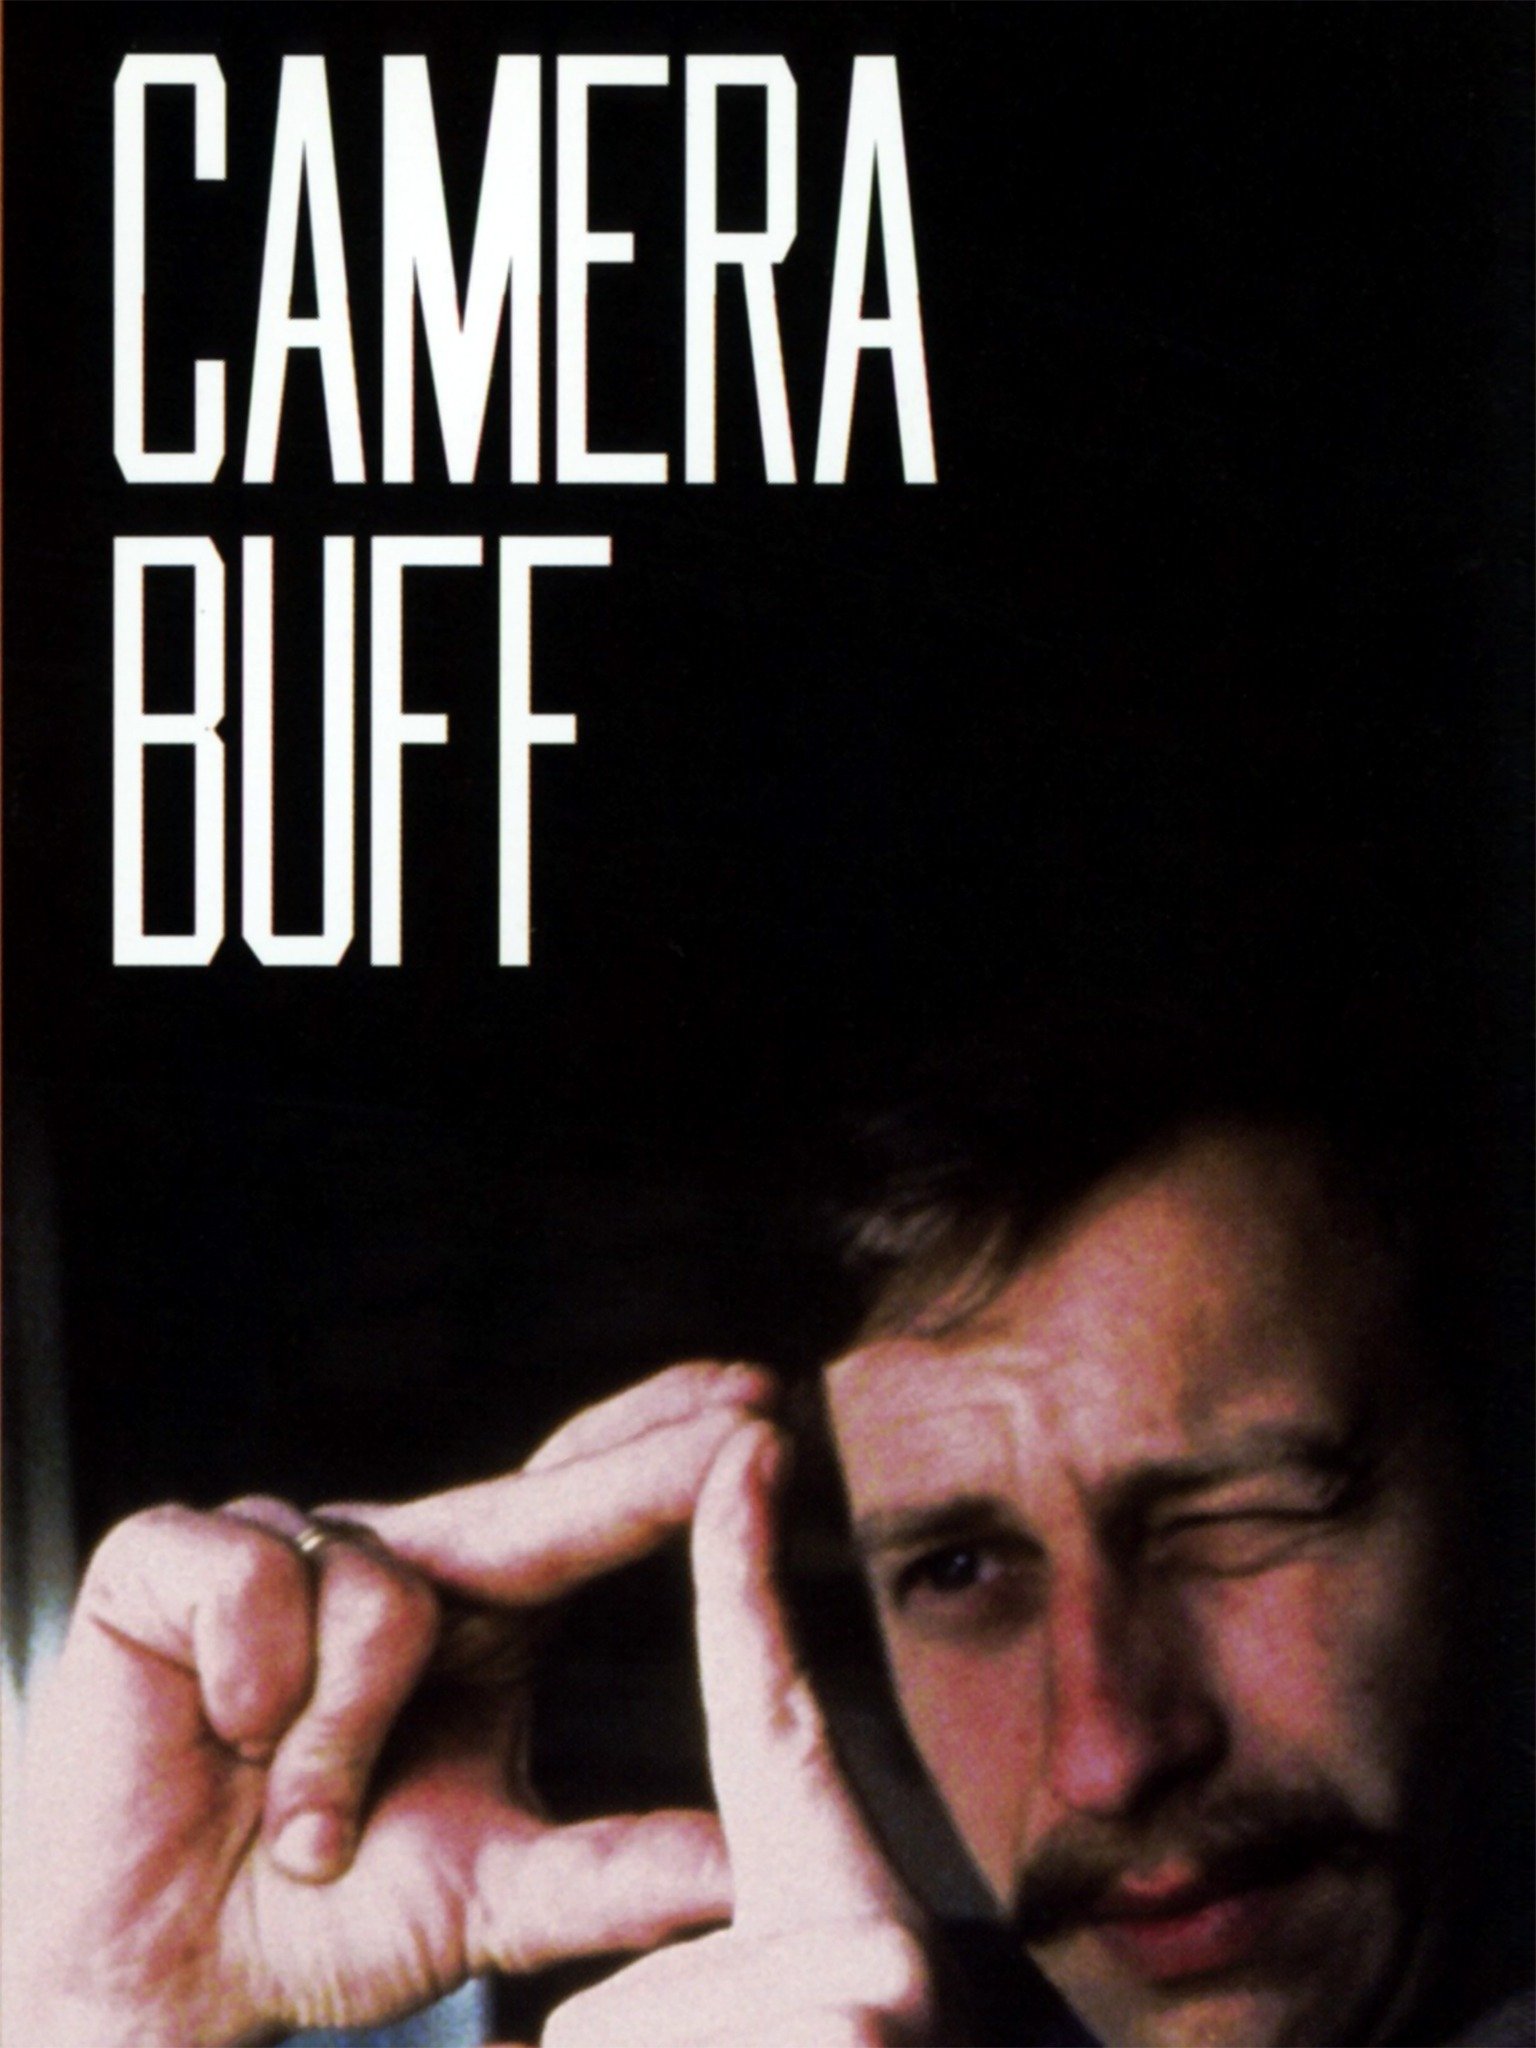 Camera Buff